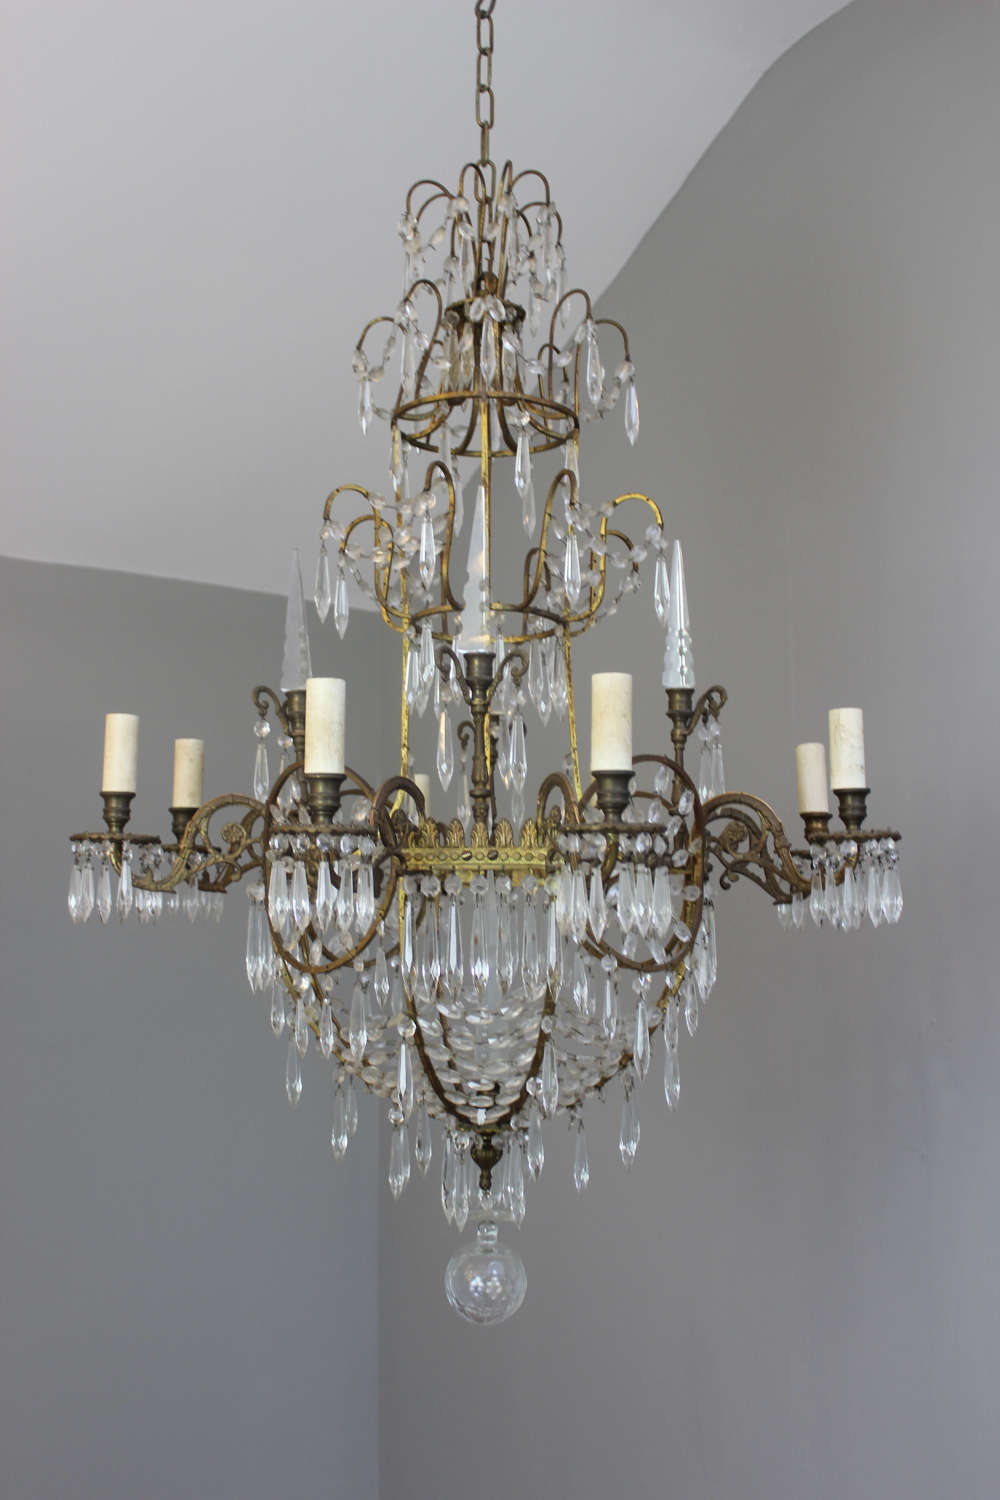 Early 20th C Swedish style Italian  chandelier